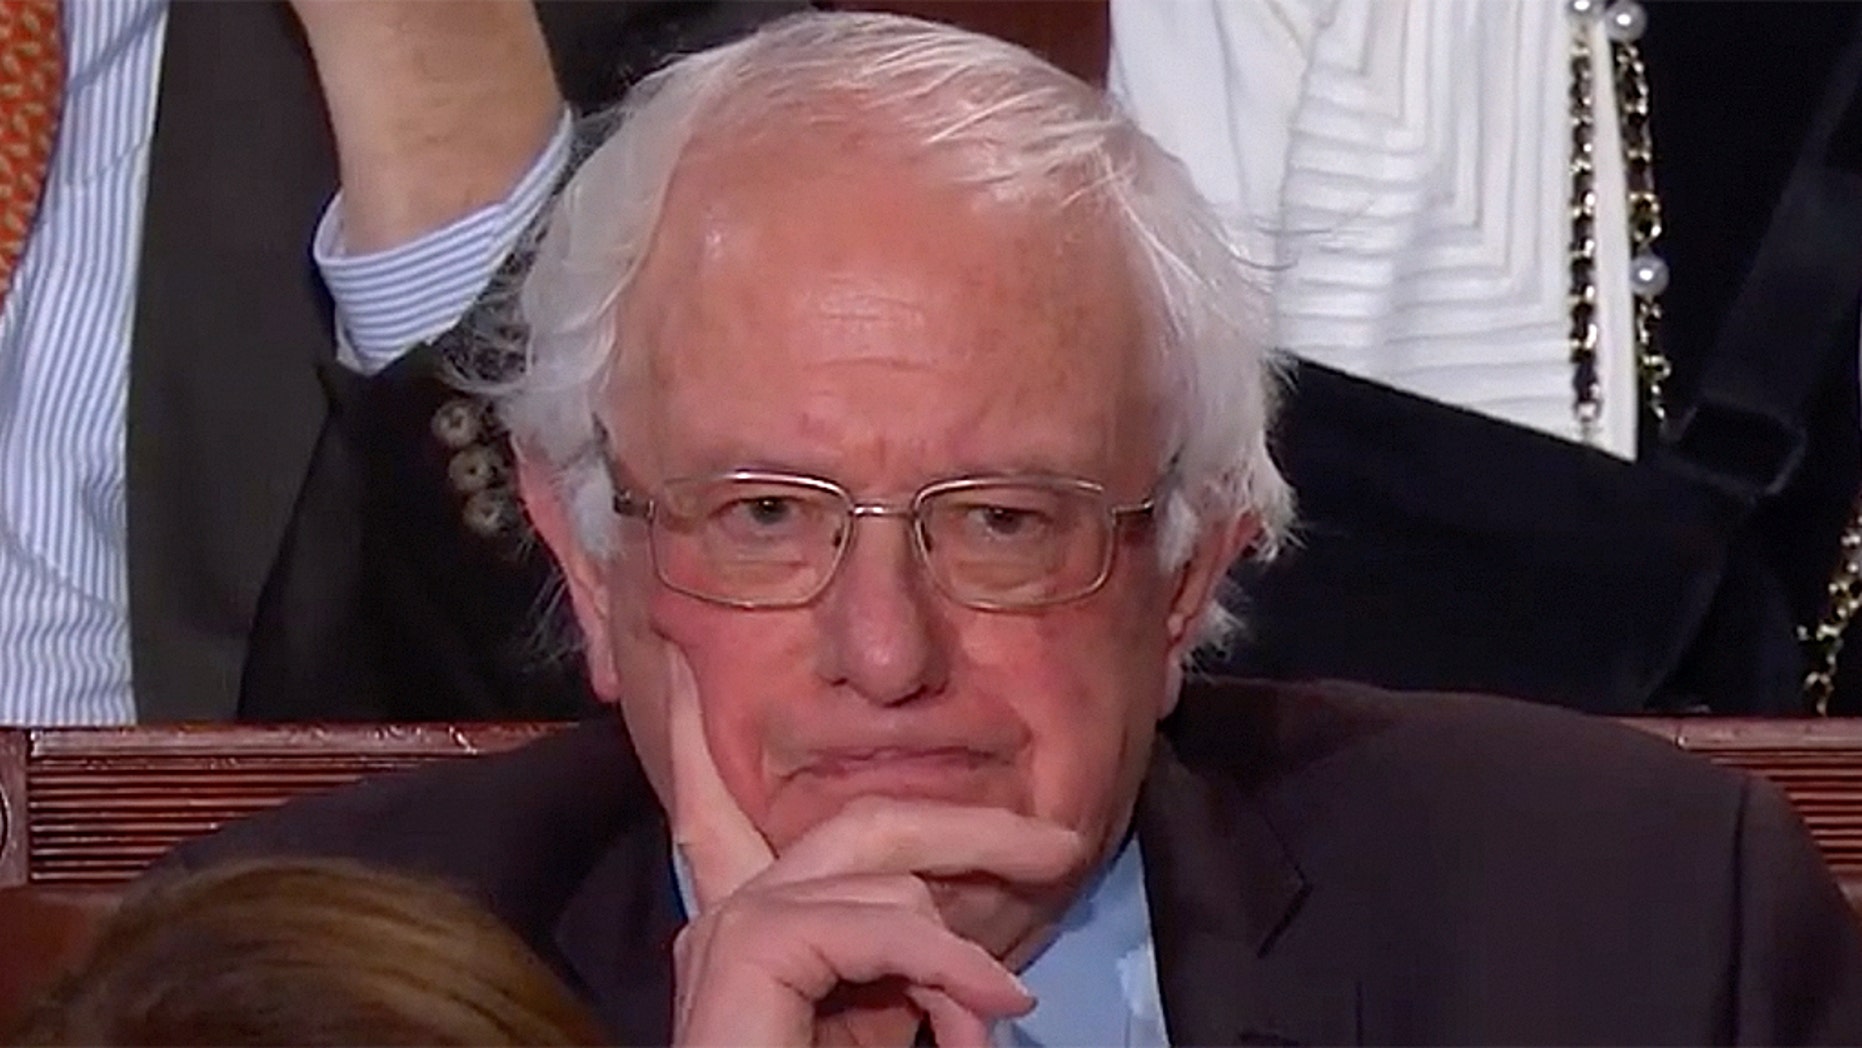 Democrats Ignore Bernie Sanders 2020 Announcement While Embracing His Socialist Policies Fox News 